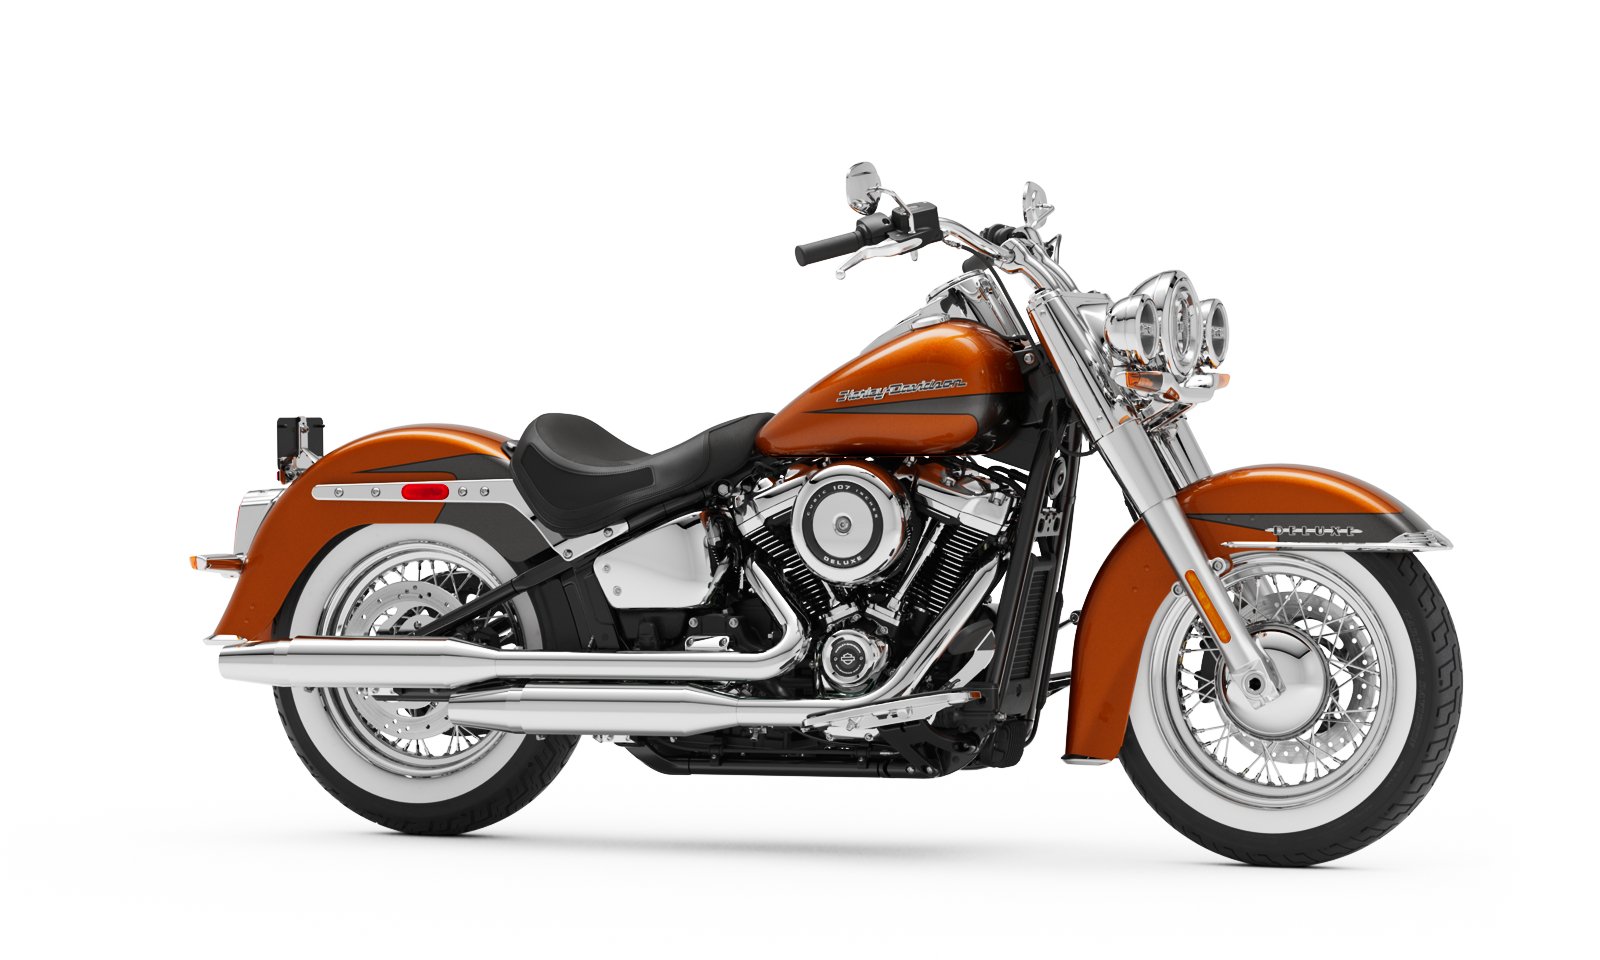 2018 Harley Davidson Deluxe Buyer S Guide Specs Price